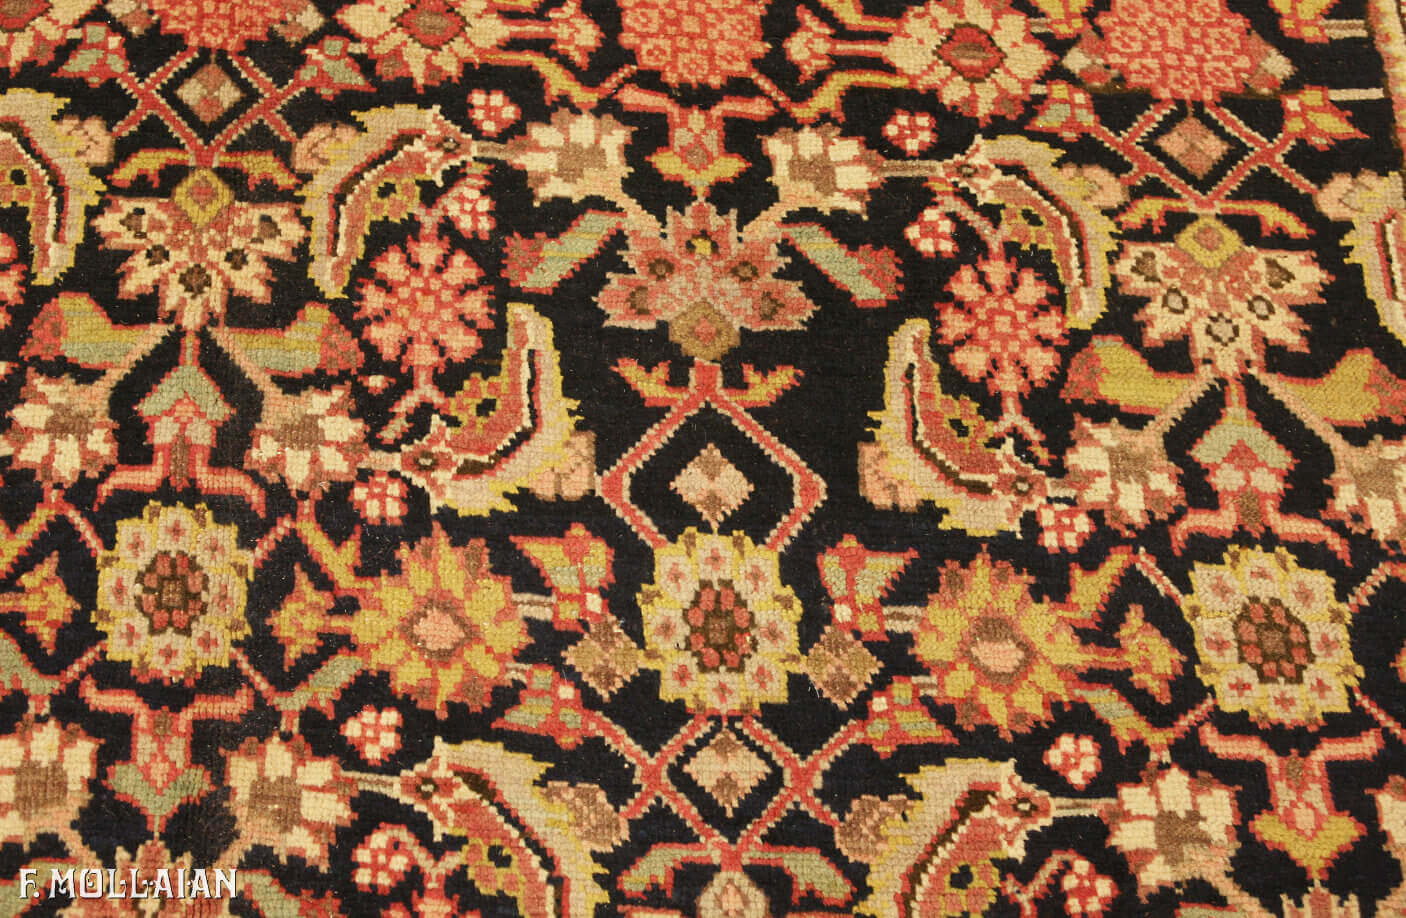 Antique Caucasian Karabakh (Qarabag) Carpet n°:67076630